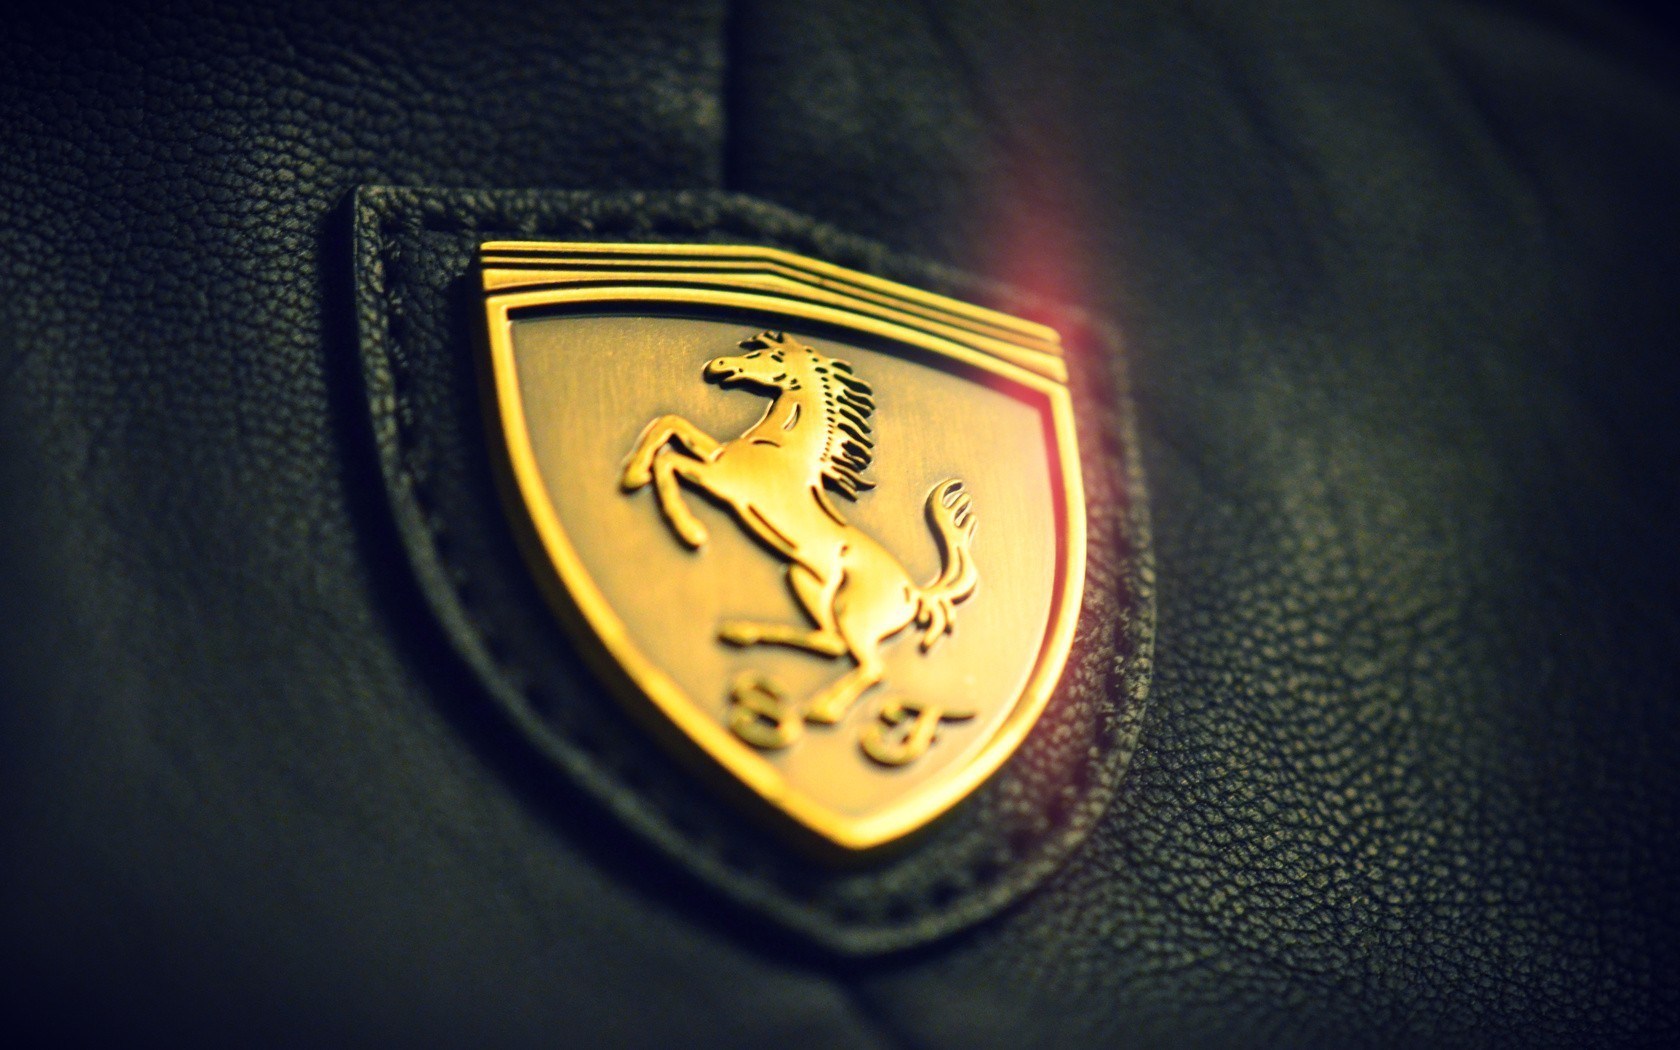 Wallpapers Logo Ferrari Hd High Definitions Backgrounds